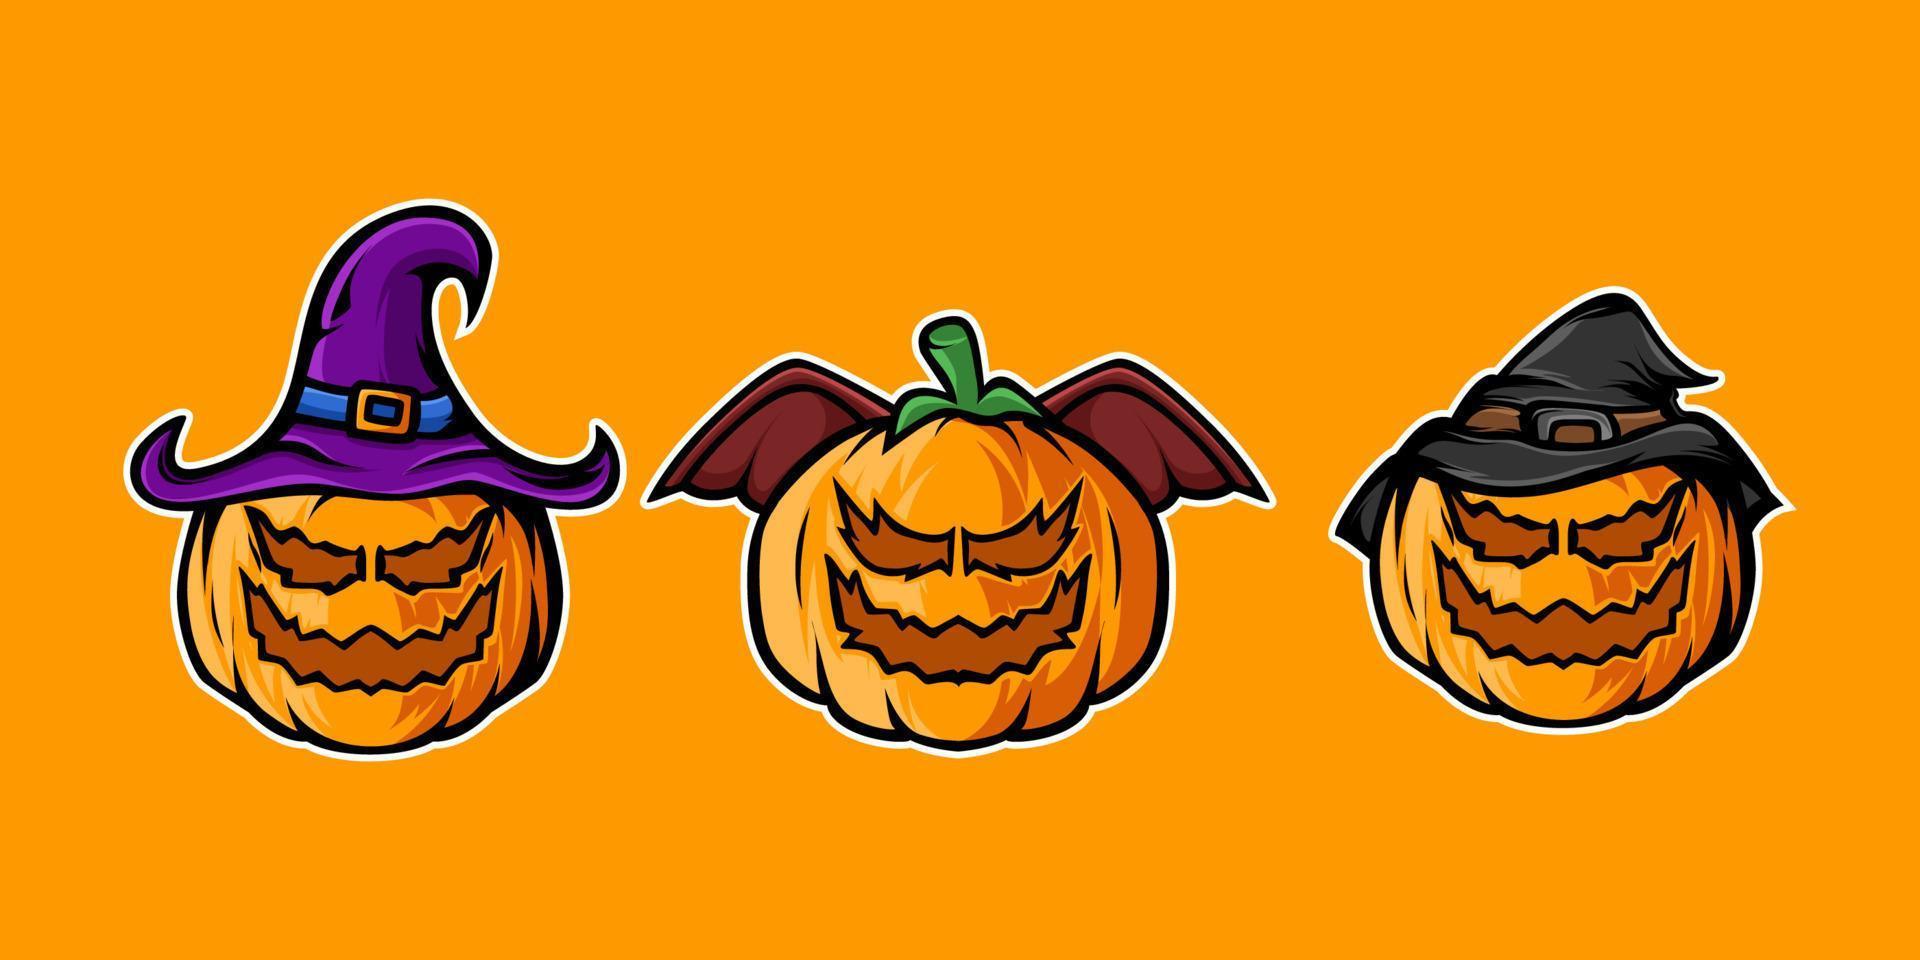 Pumpkin vector illustration design set on orange background. Happy Halloween holiday symbol. Orange pumpkins in various styles are great for your design during the Halloween holidays